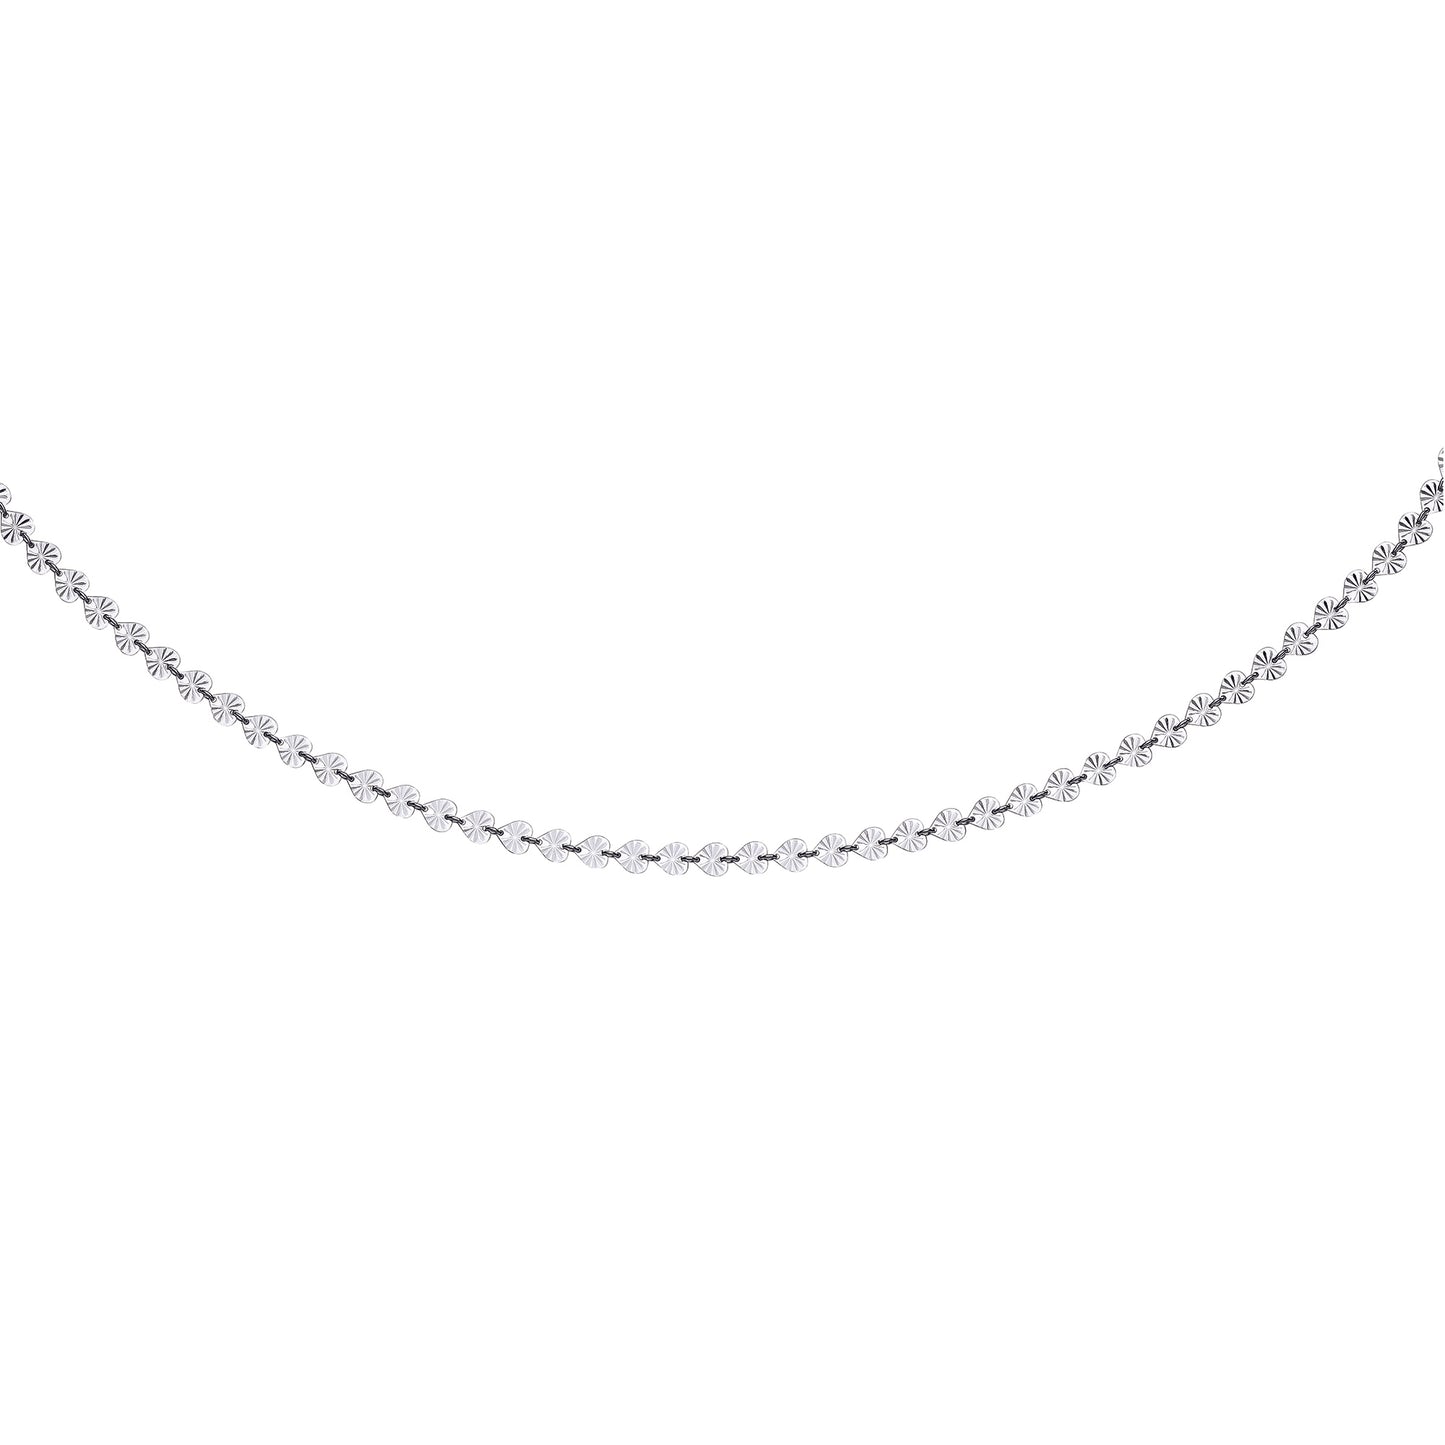 Silver  Sunburst Forzatina Love Heart Flat Link Necklace 6mm 18" - GVK332